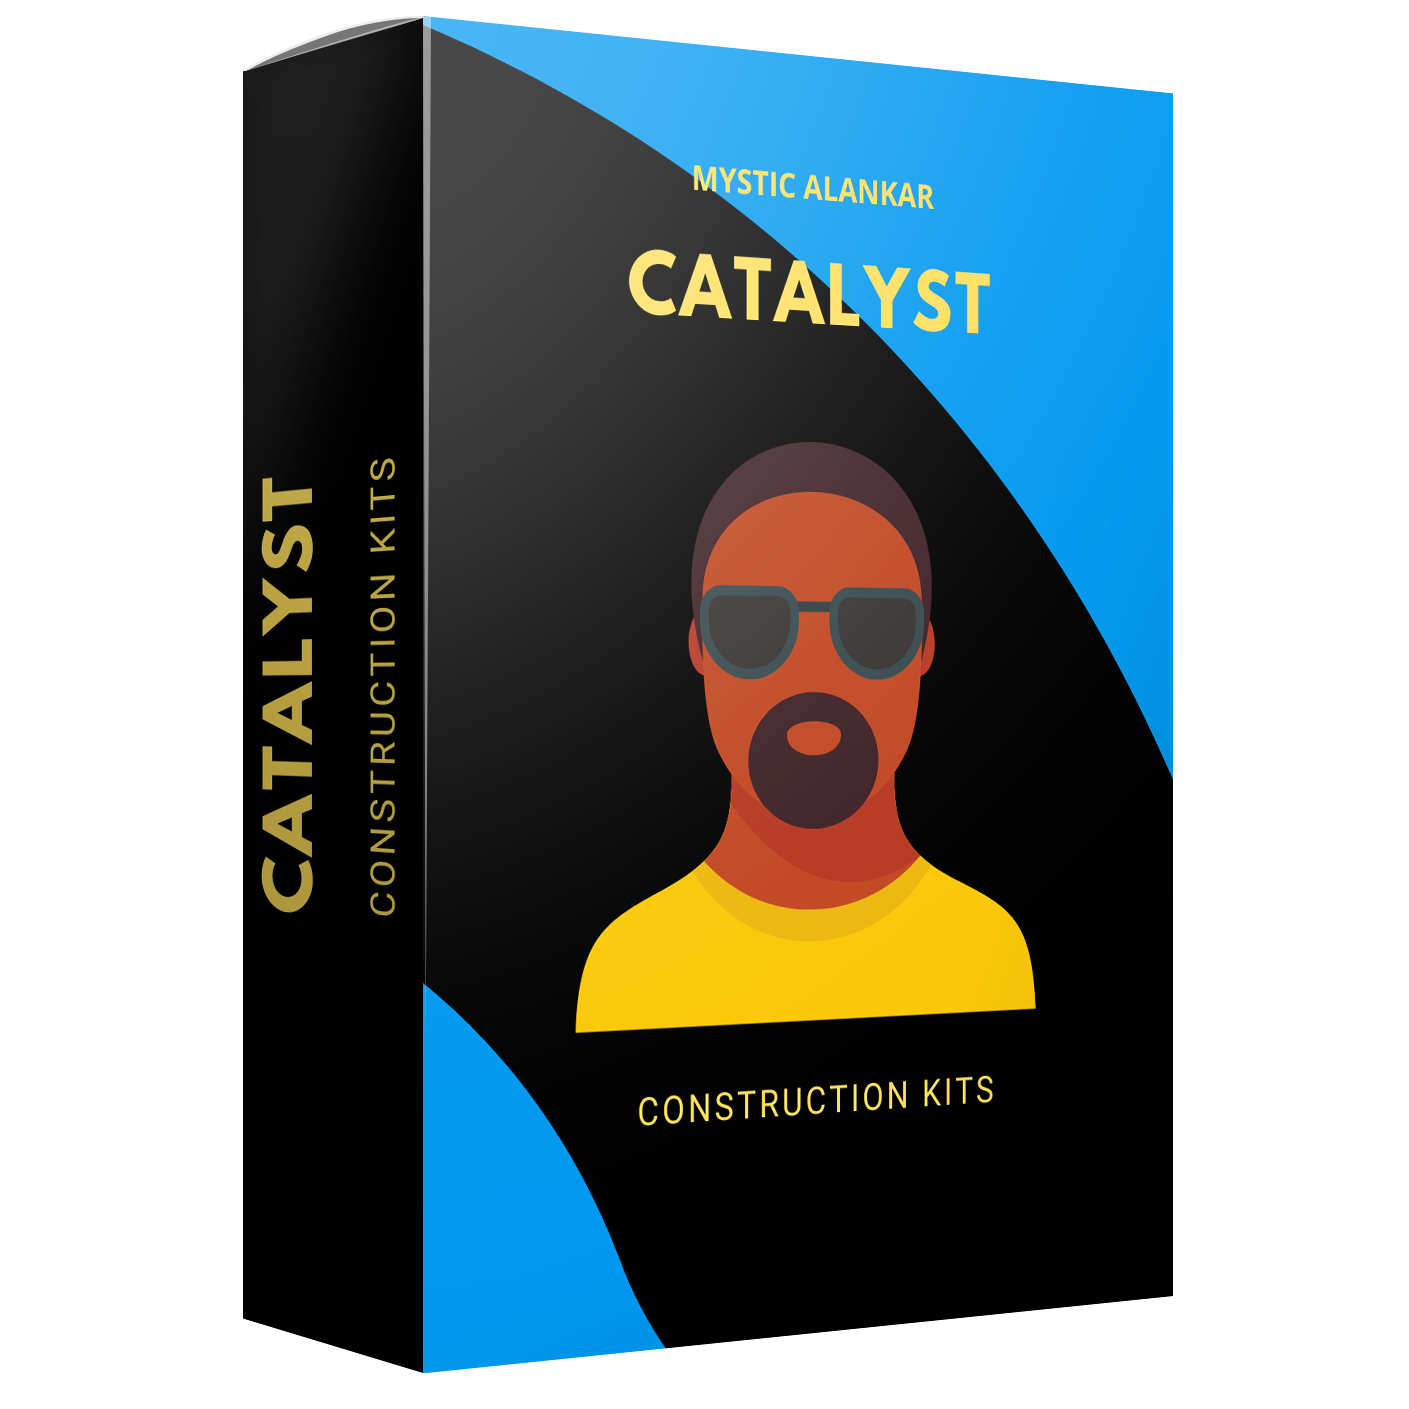 Catalyst - Drill/Trap Construction Kits